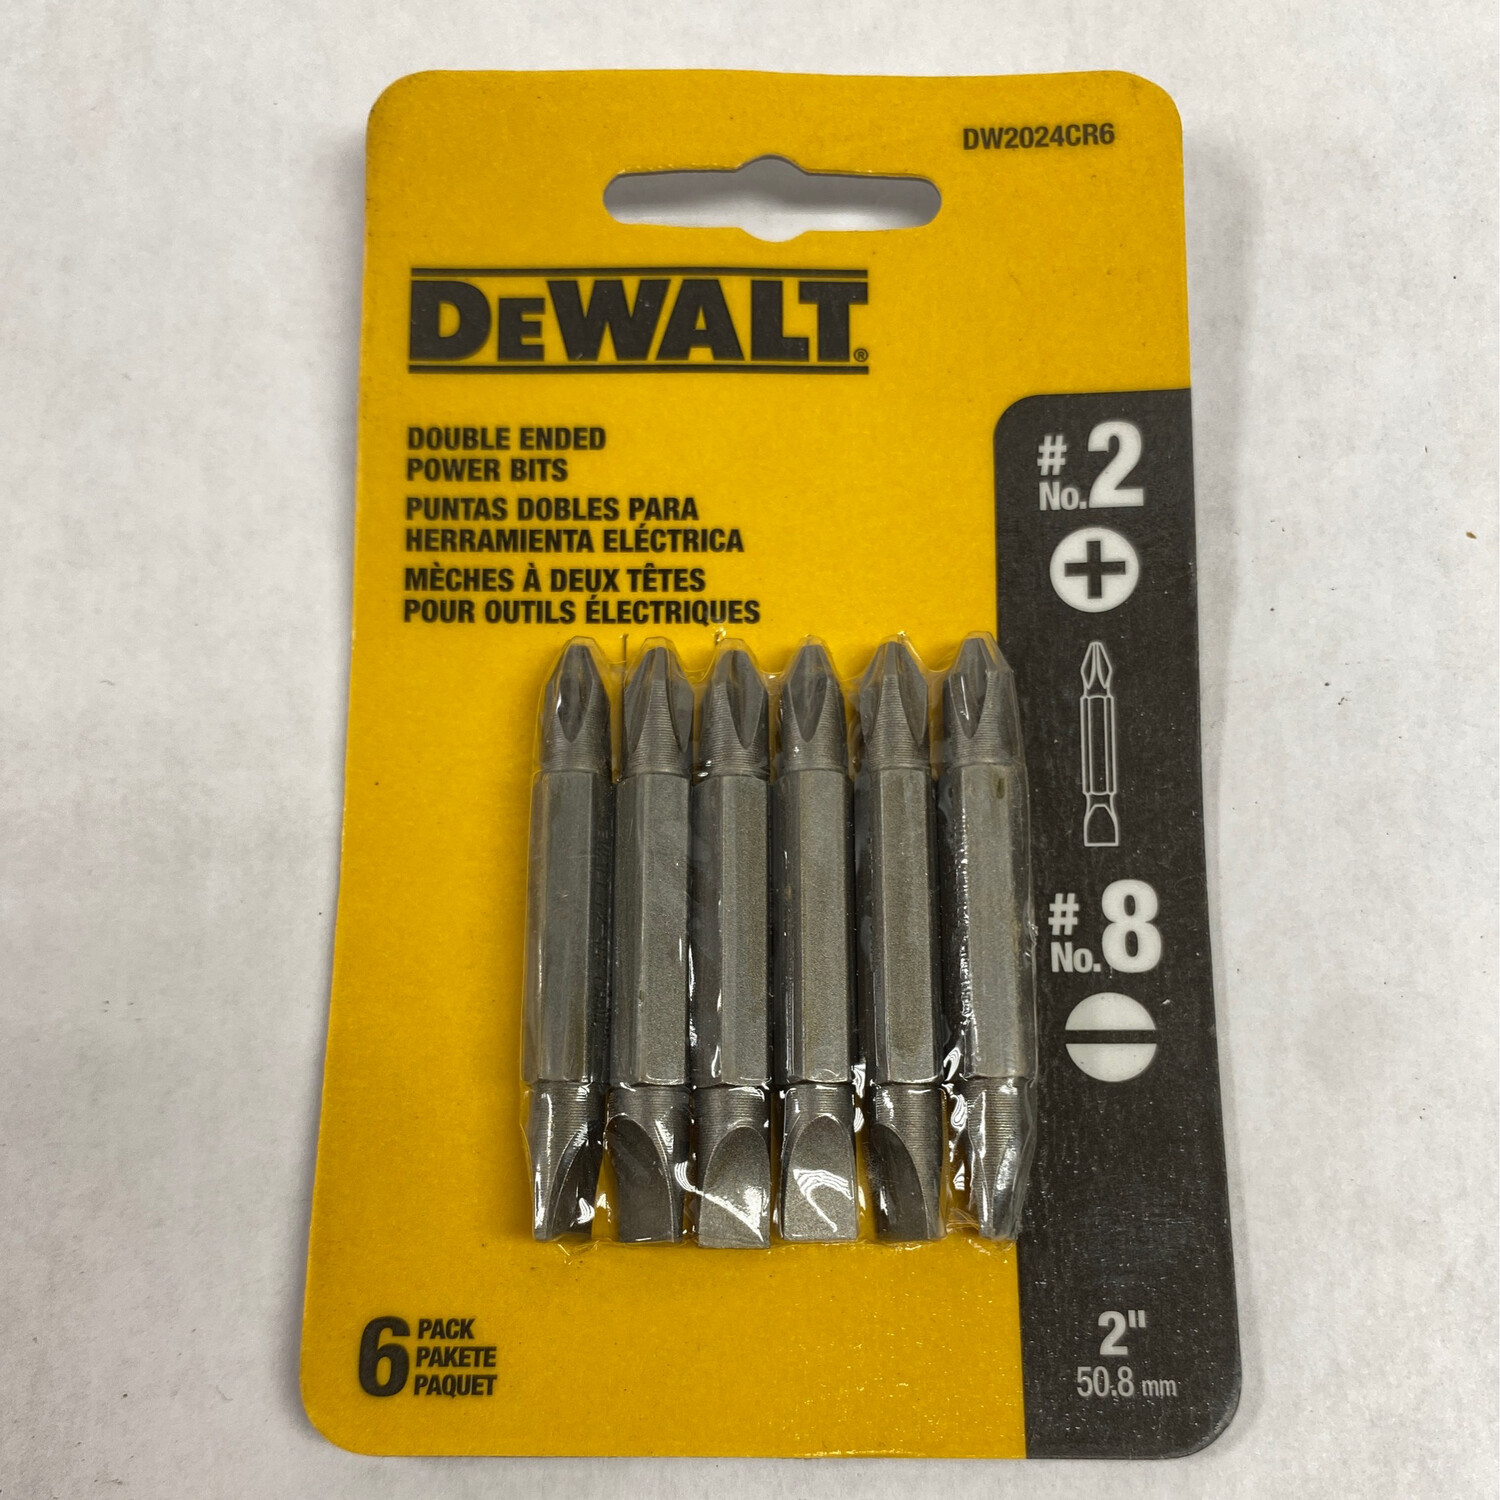 DeWalt Double Ended Power Bits (6 Pack) DW2024CR6